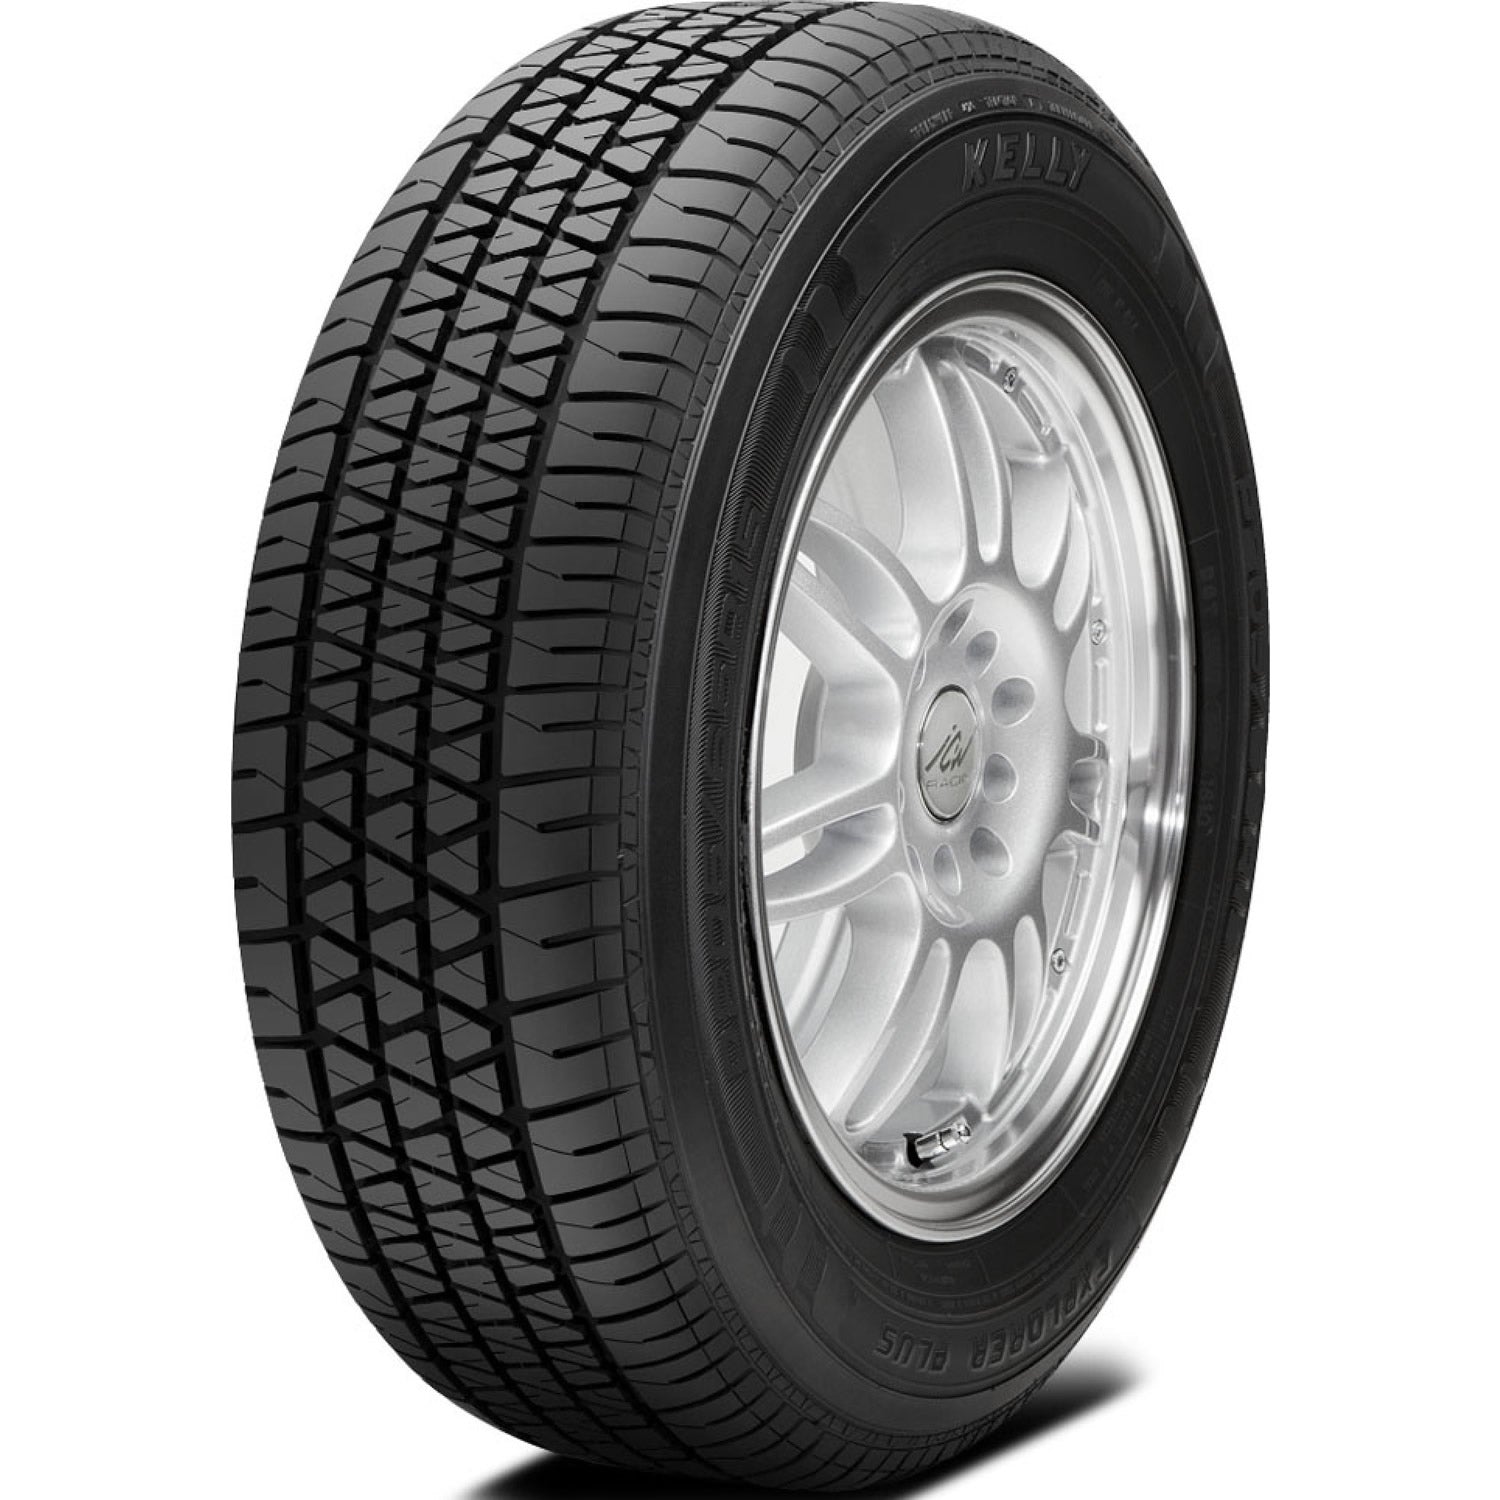 KELLY EXPLORER PLUS 205/65R15 (25.5X8.3R 15) Tires